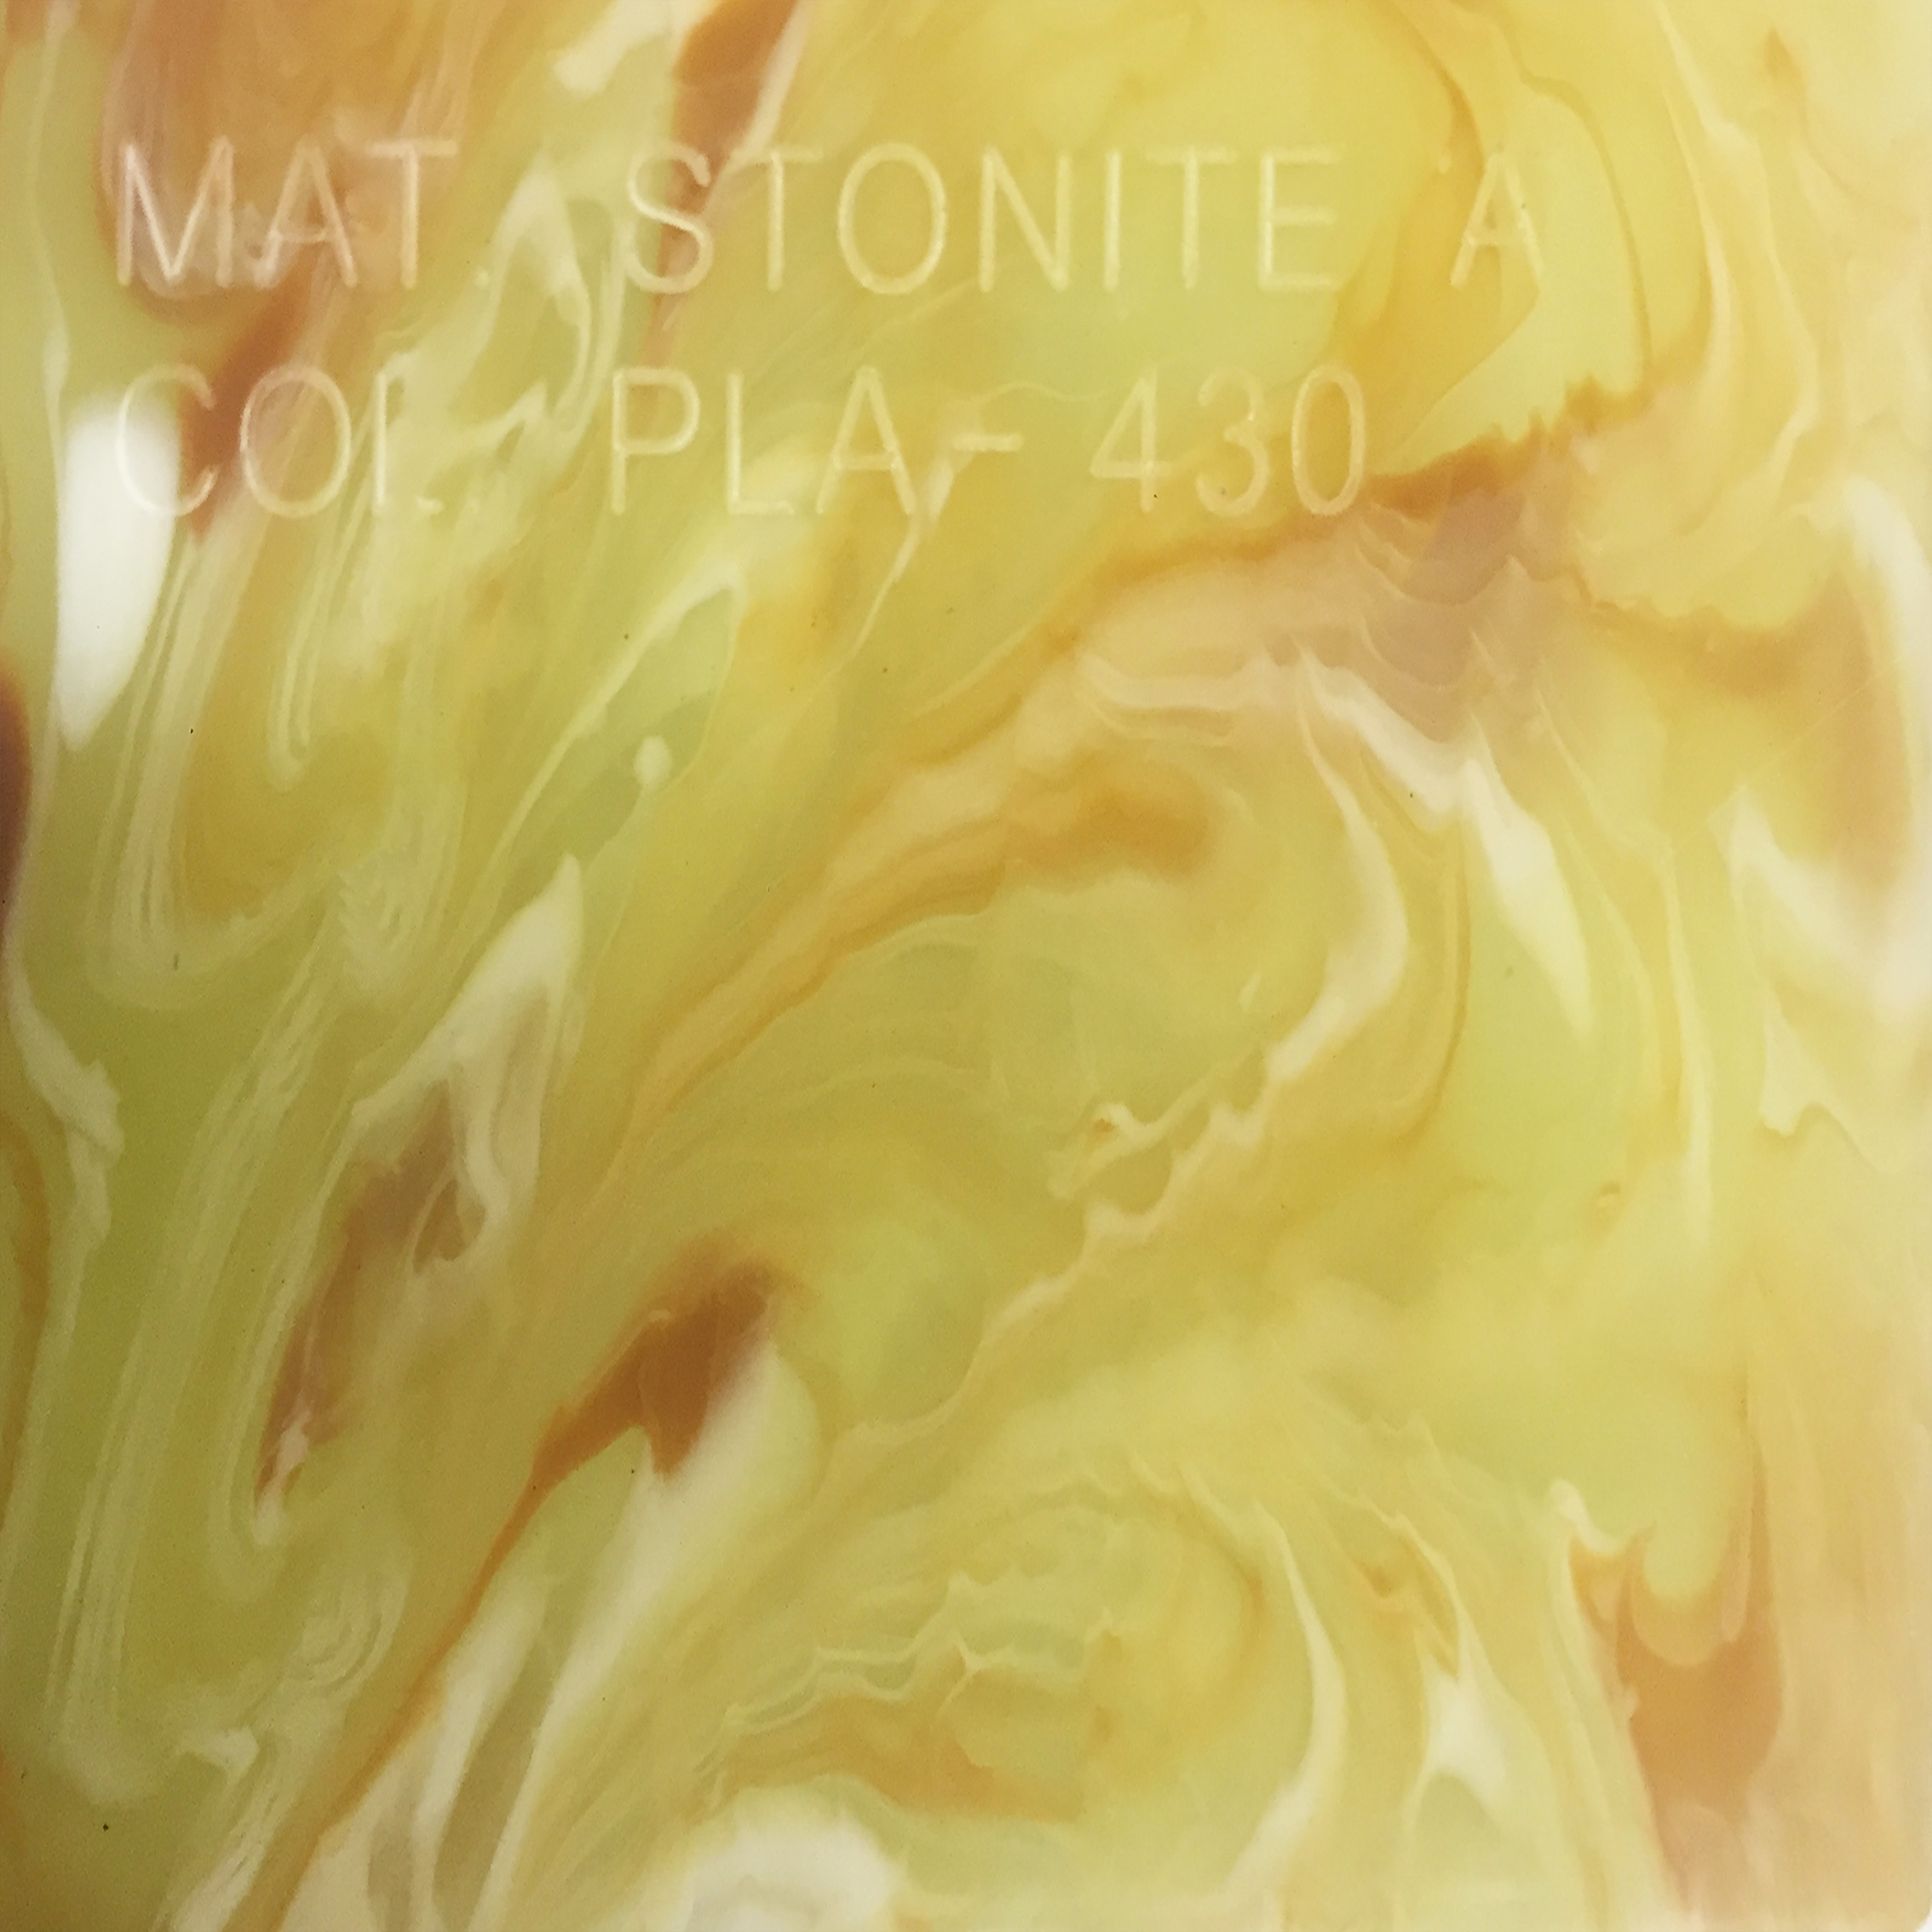 MAT.STONITE-A-COL.PLA-430